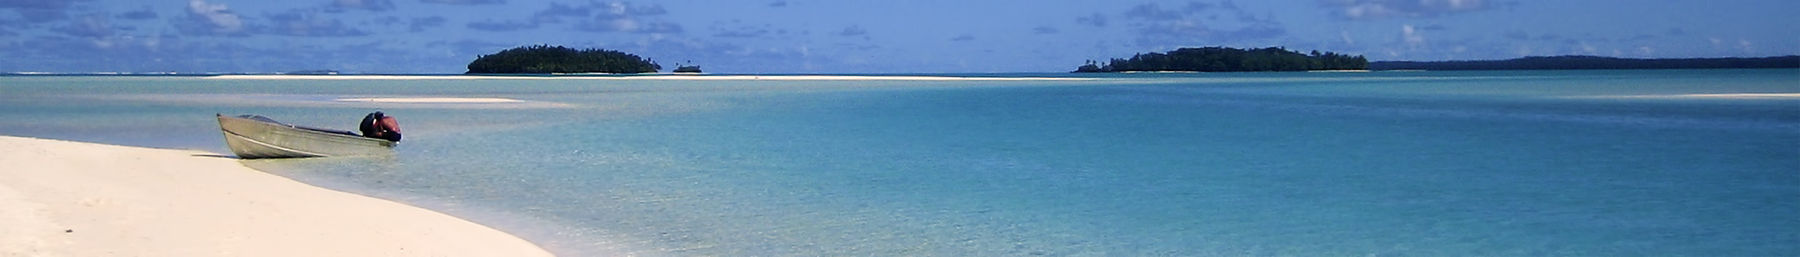 Острови Кука пляж banner.jpg